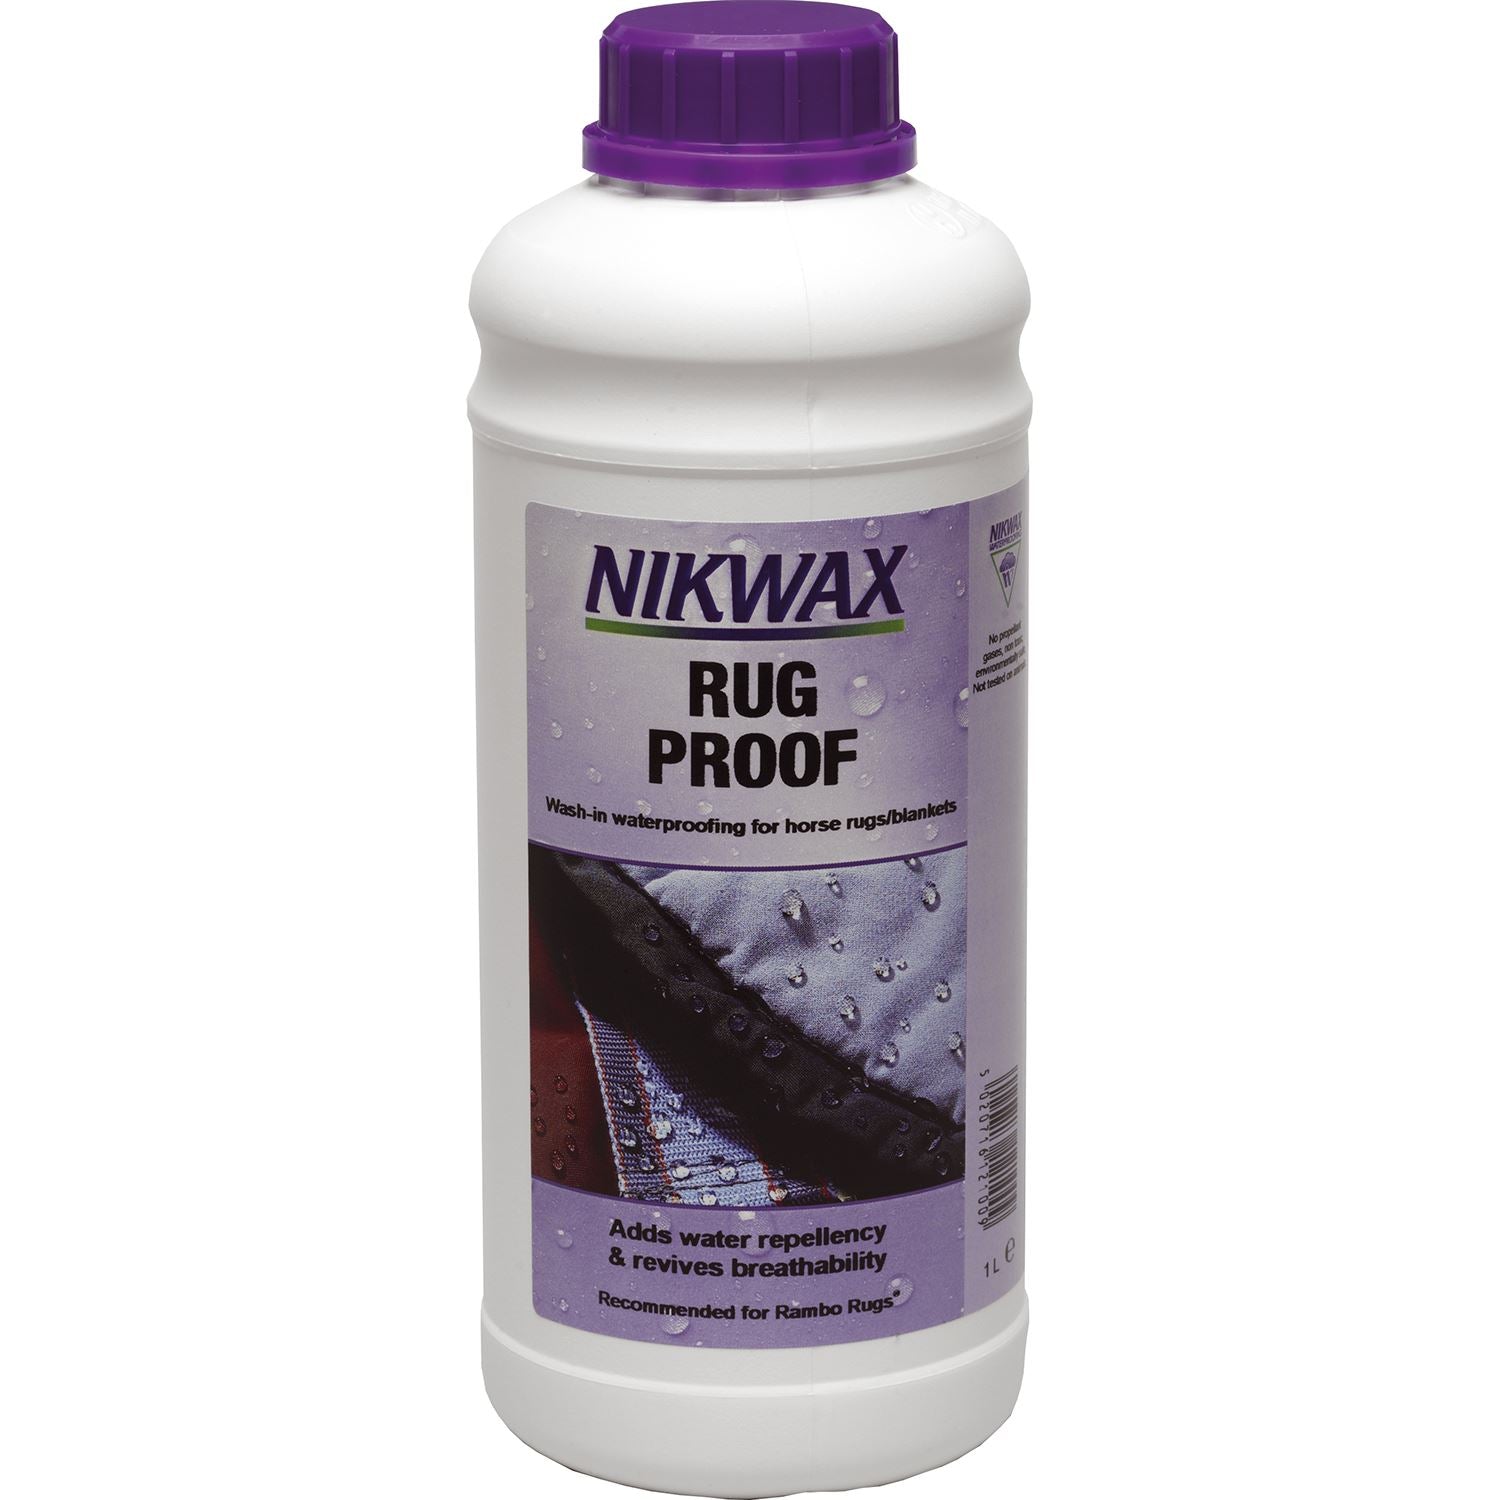 Nikwax Rug Proof - Just Horse Riders